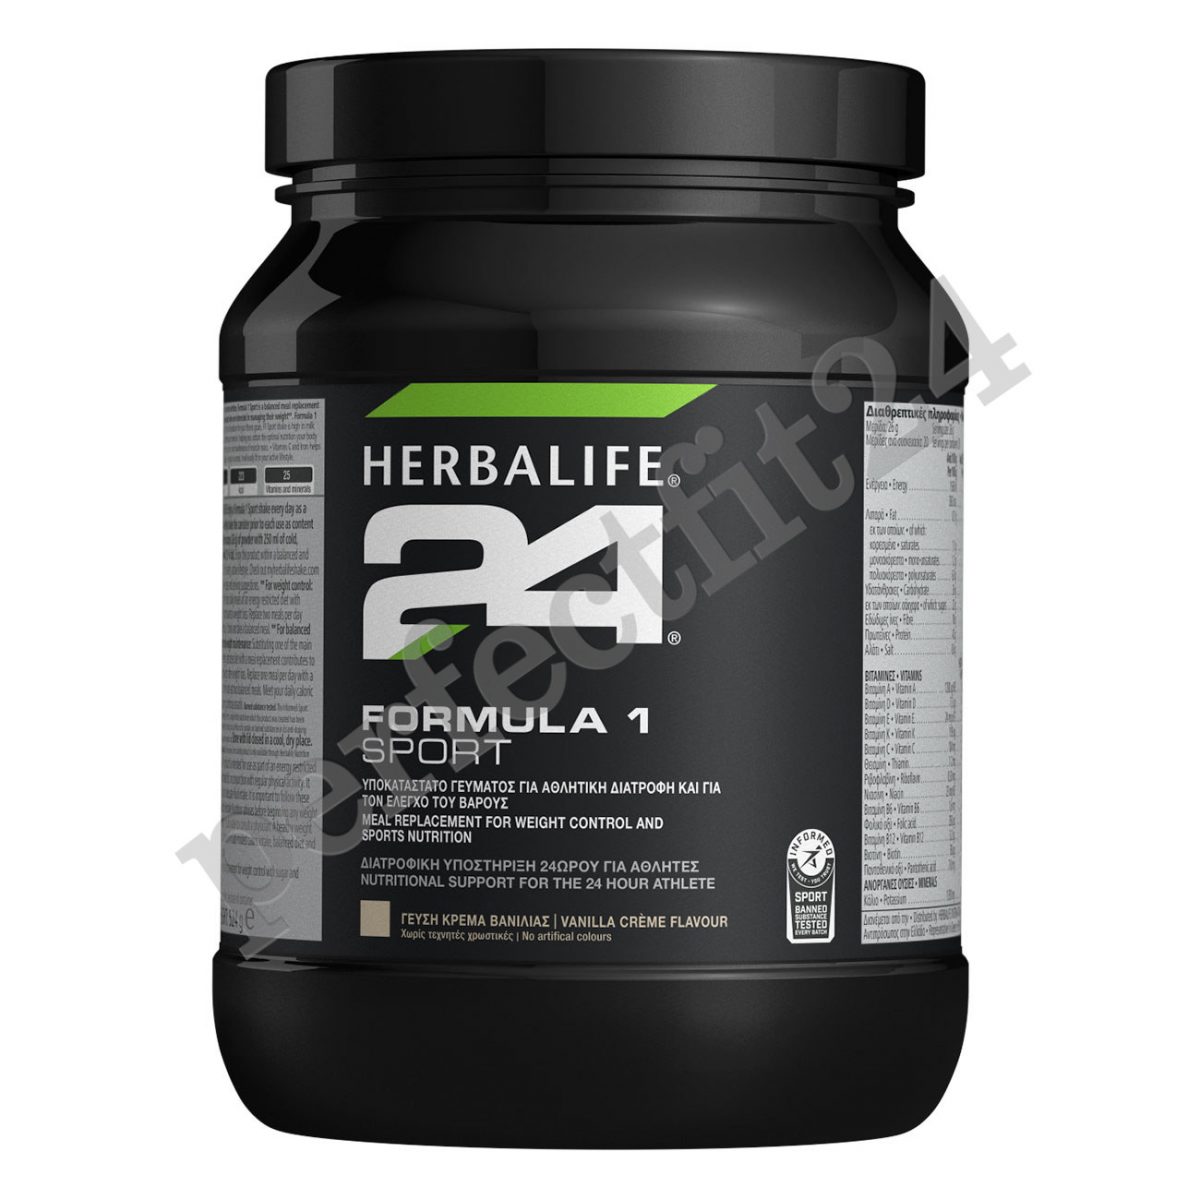 4461 | Herbalife24® Formula 1 Sport Πρωτεϊνούχο Ρό